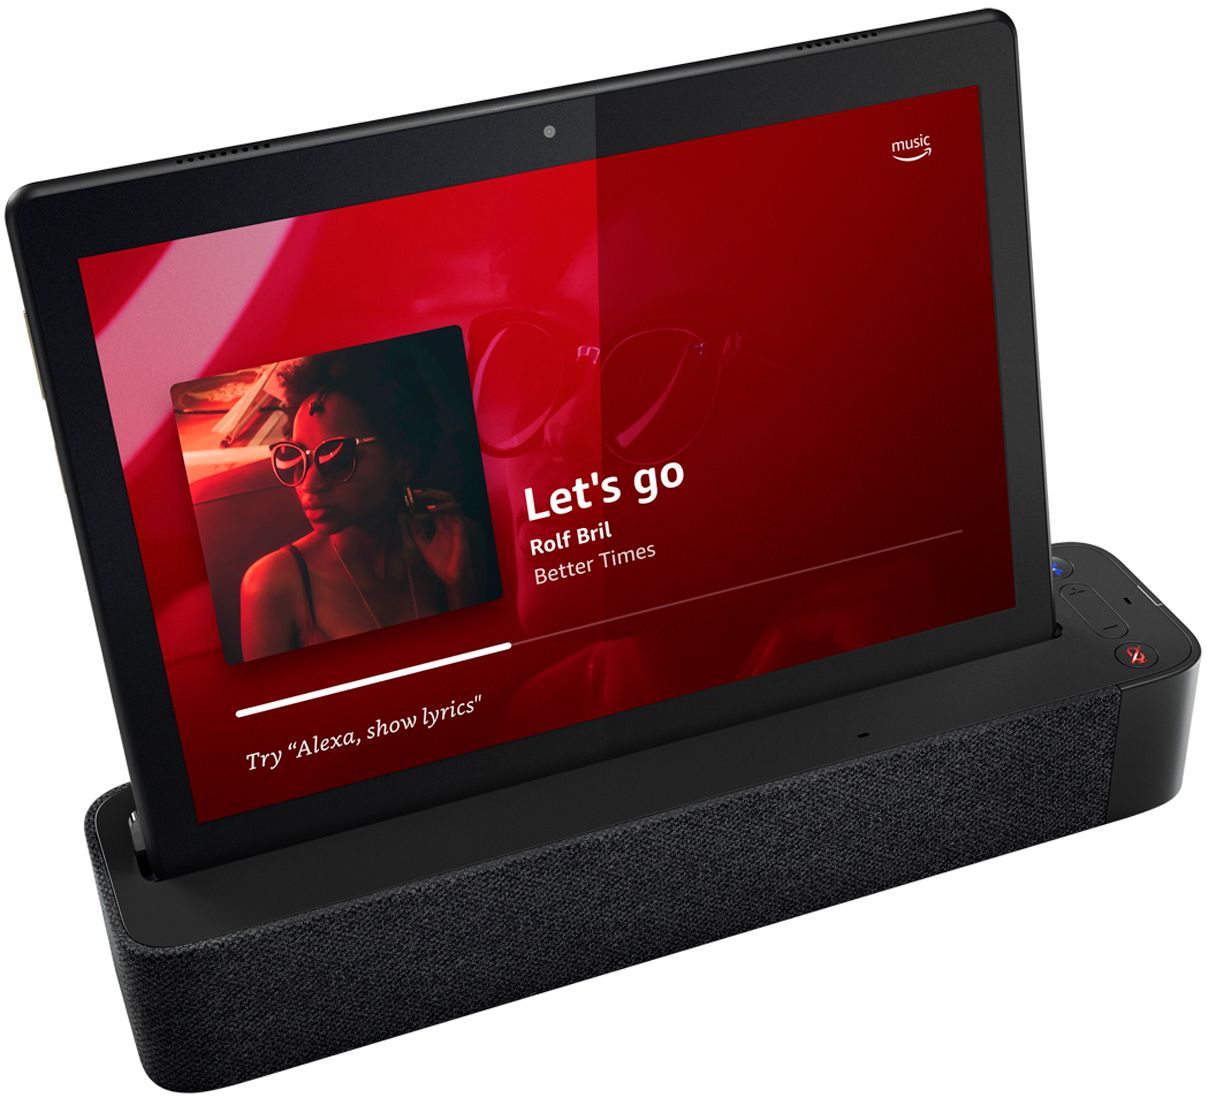 Lenovo Smart Tab M10 HD review: A solid media slate